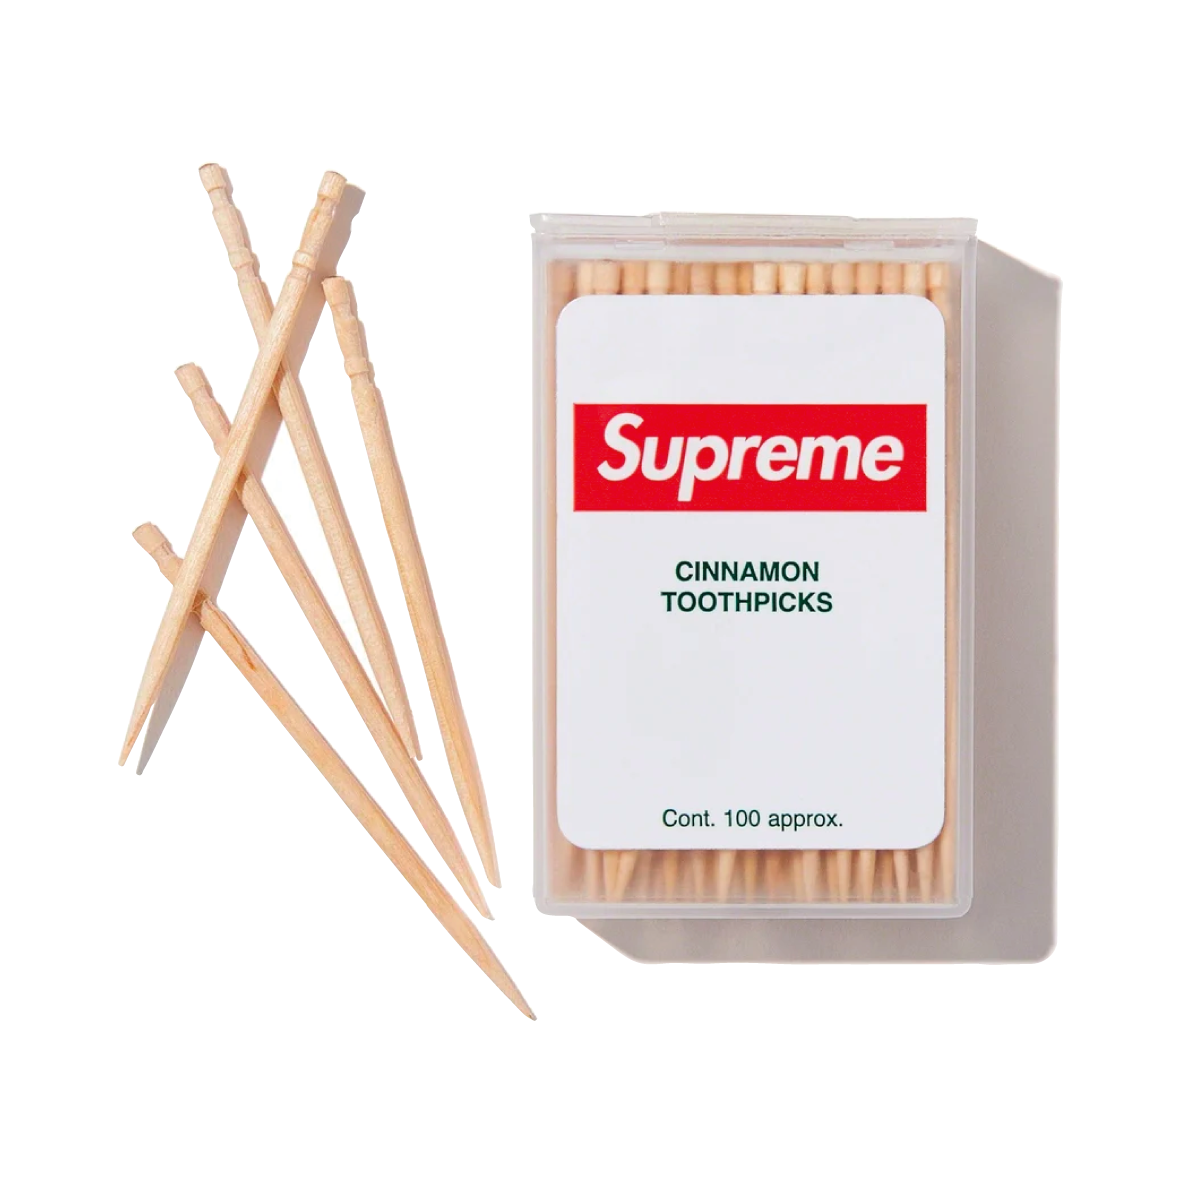 Supreme Cinnamon Toothpicks